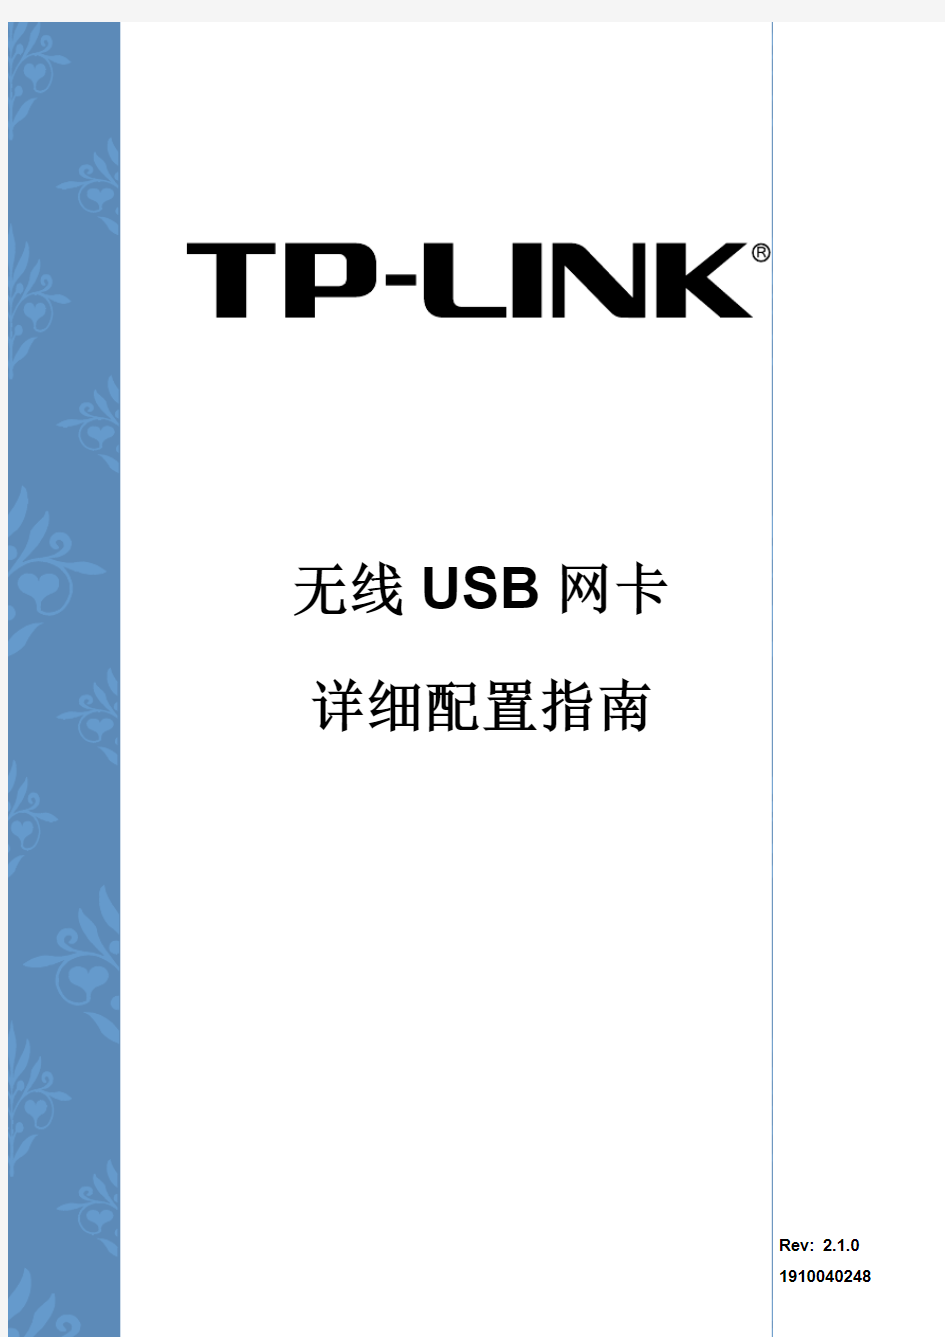 TP-link 无线USB网卡详细配置指南